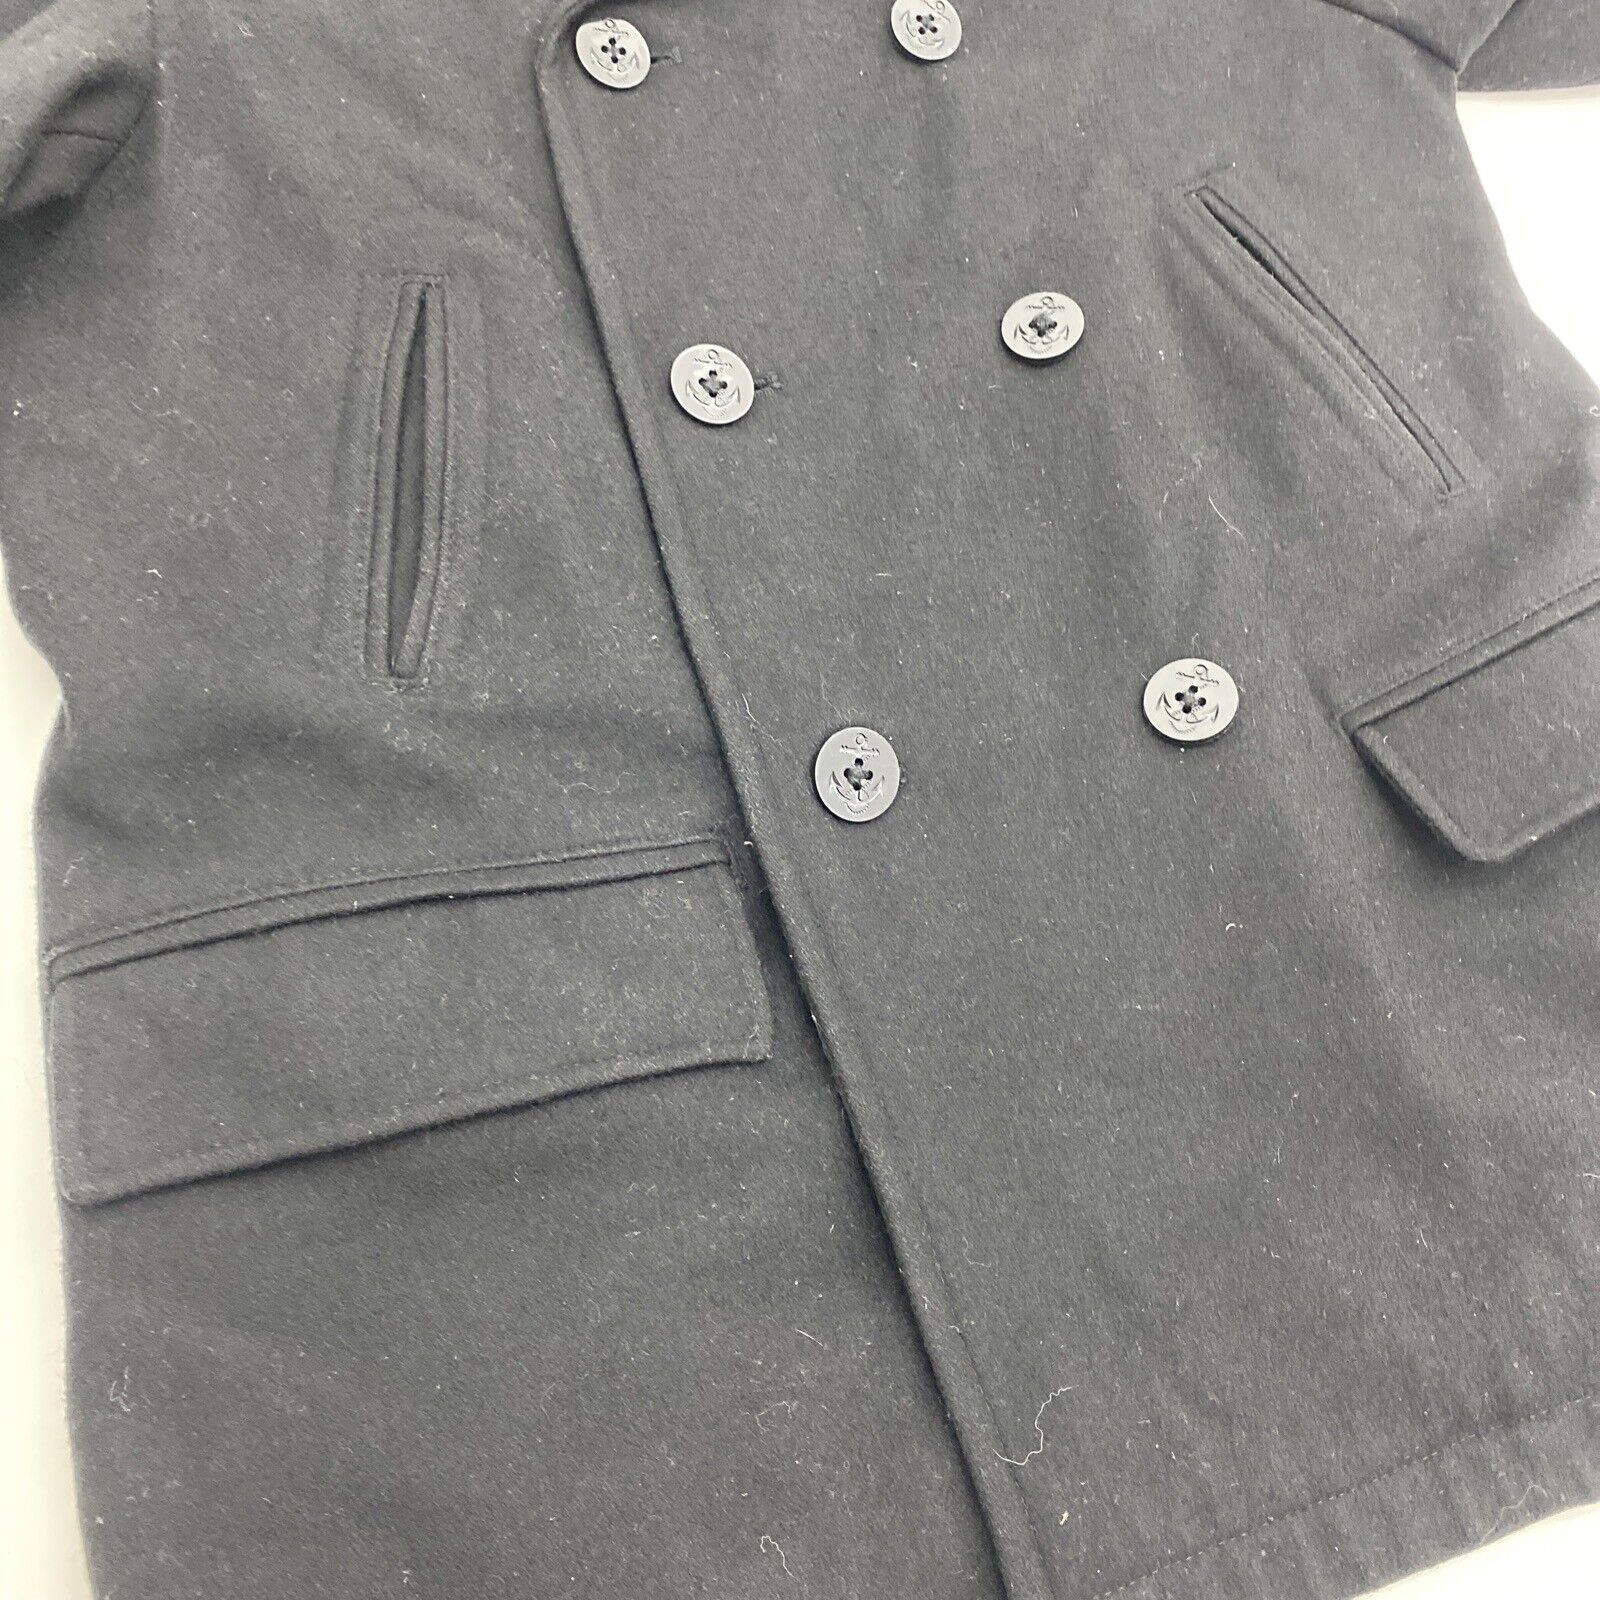 Nautica Black Wool Blend Peacoat Coat Jacket Mens Size Medium